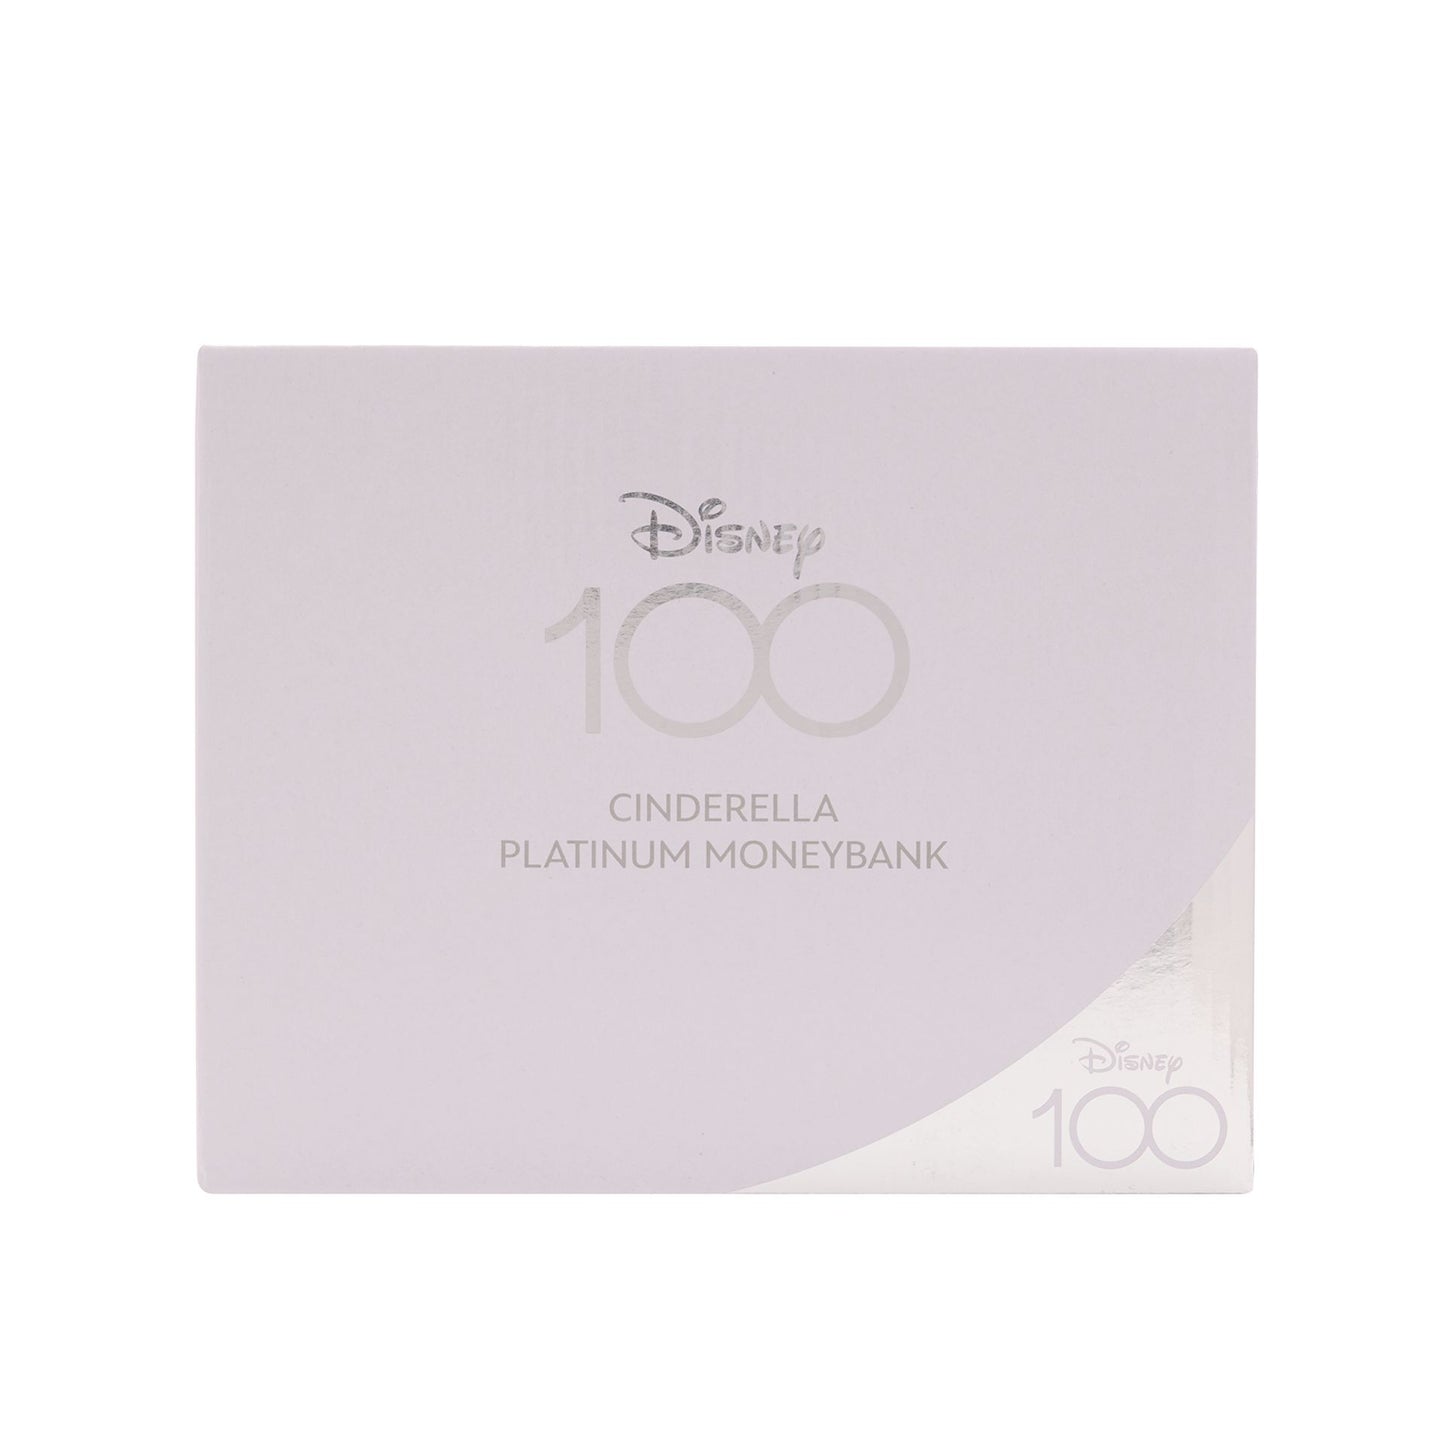 Disney 100 Cinderella Money Bank